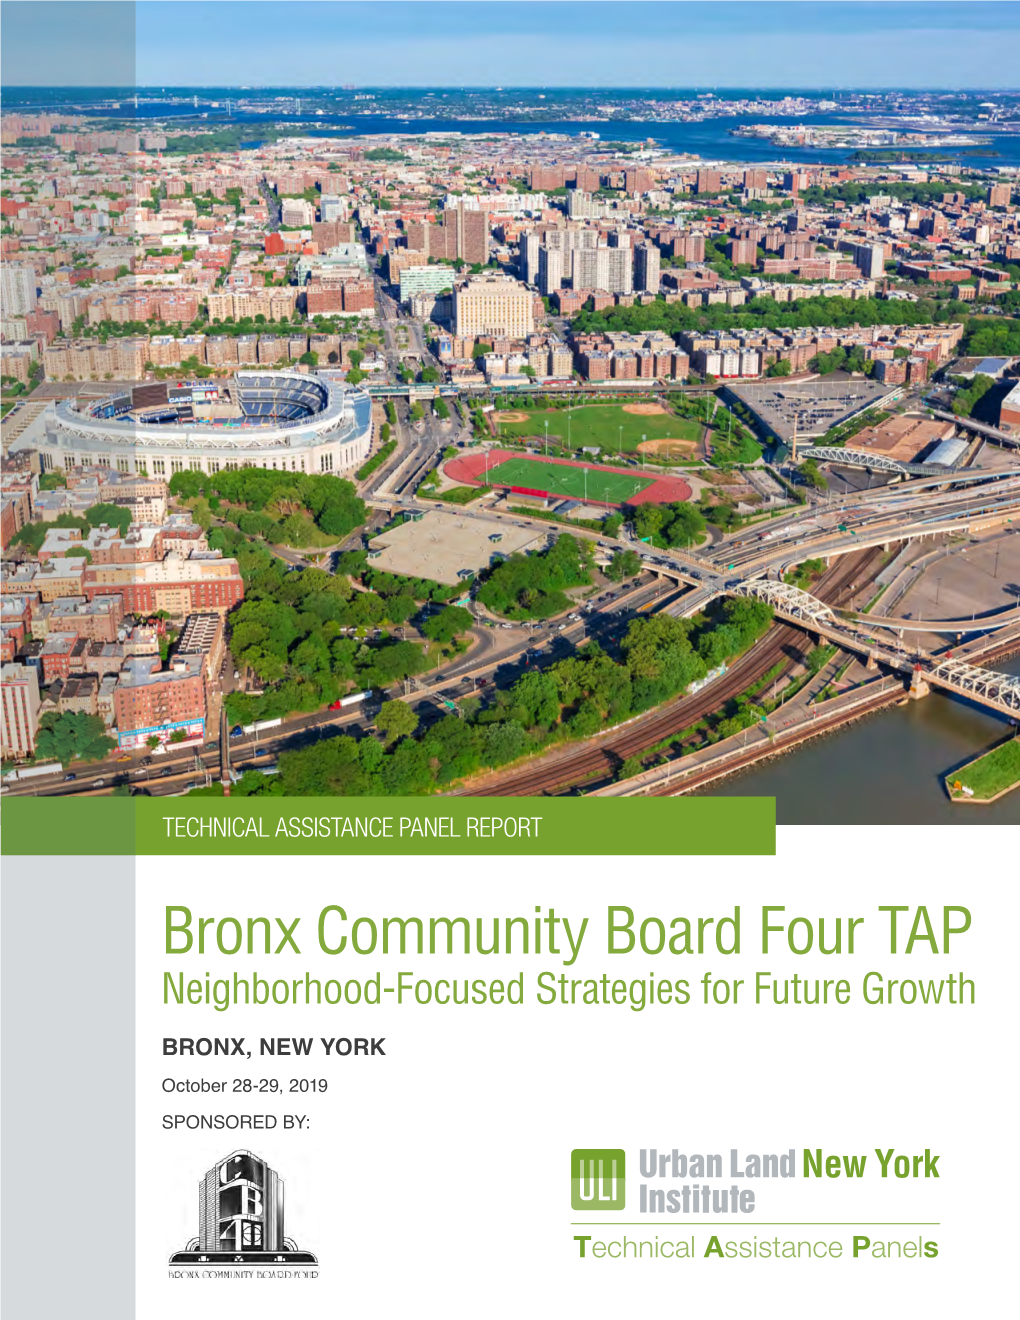 ULI NY Bronx CB4 TAP Report